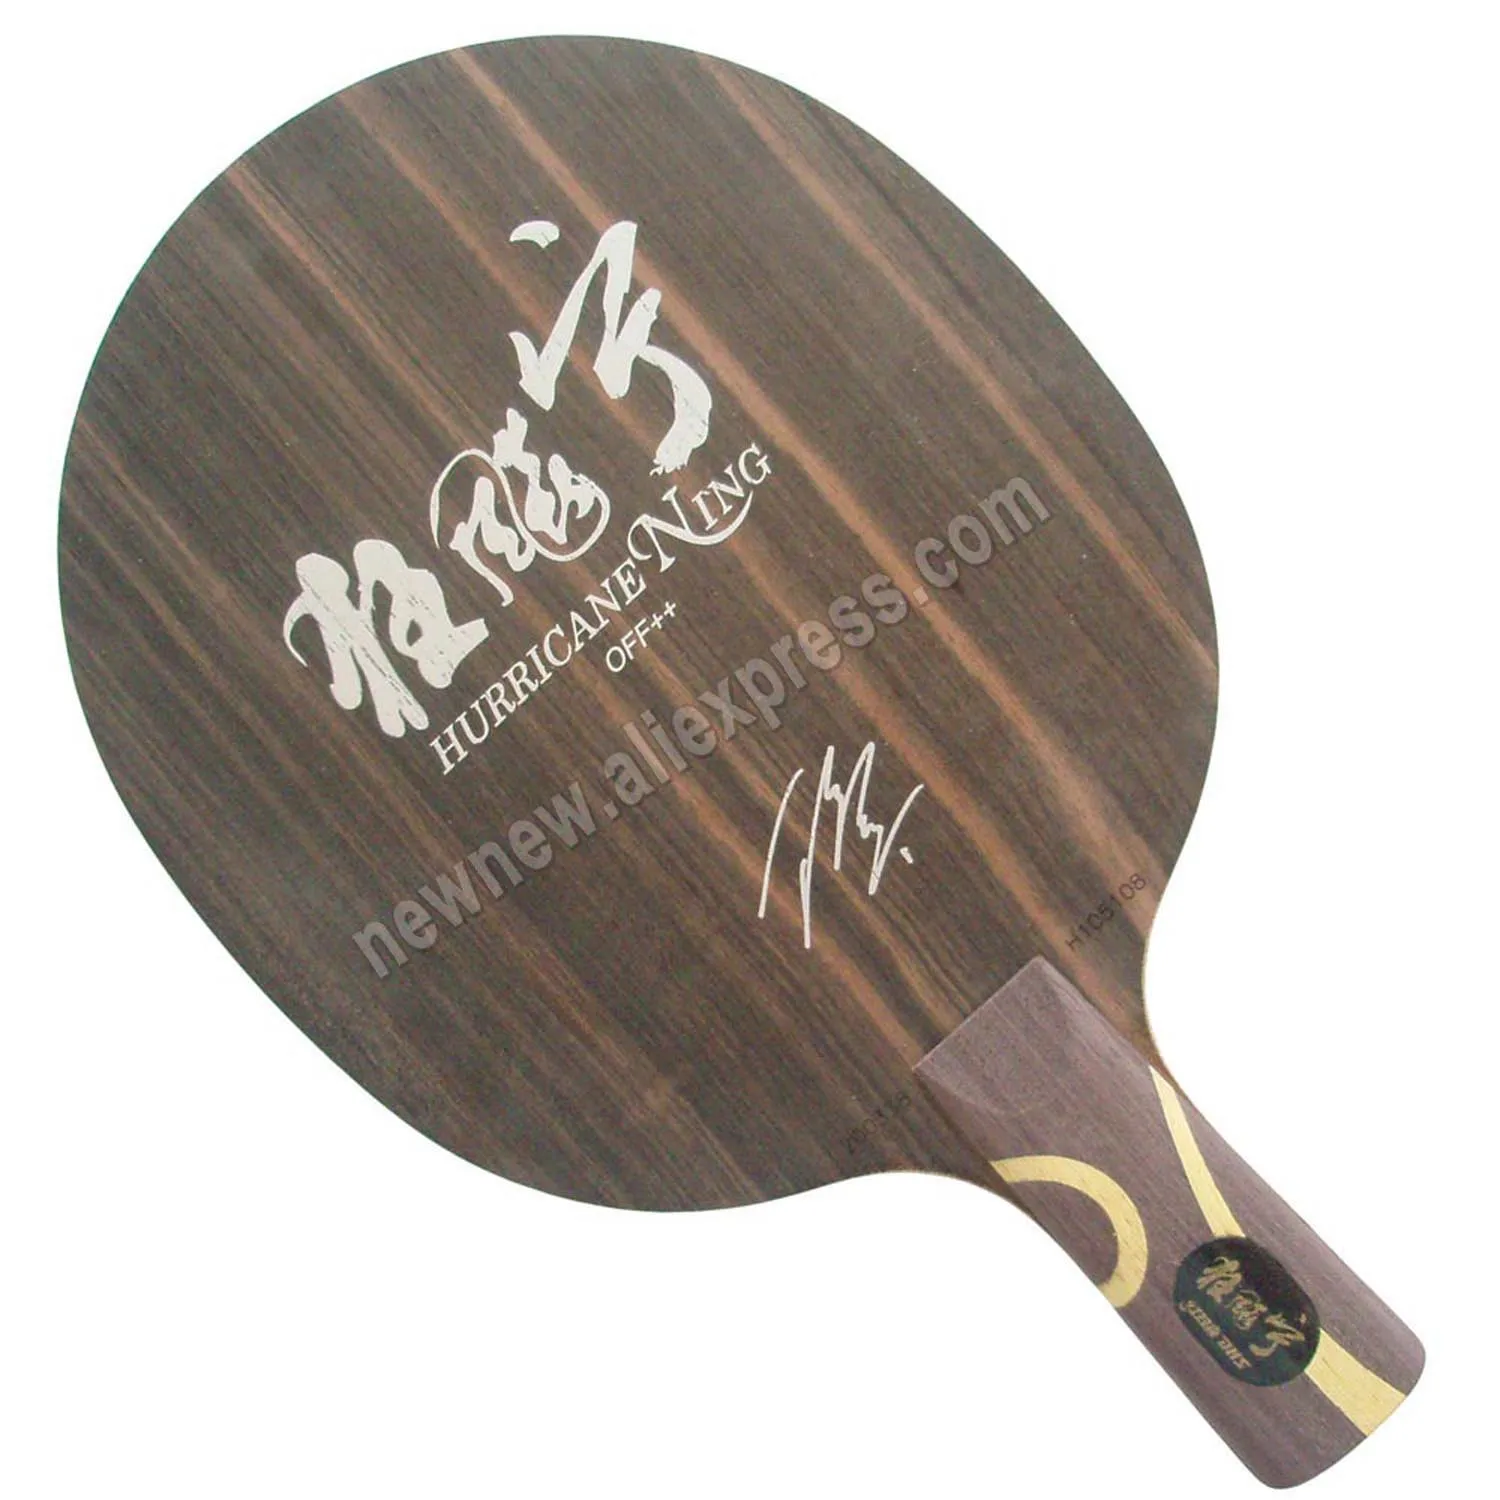 

DHS Hurricane Ning Table tennis racket racquet sports ping pong paddles dhs racket world champion Ding Ning Ebony